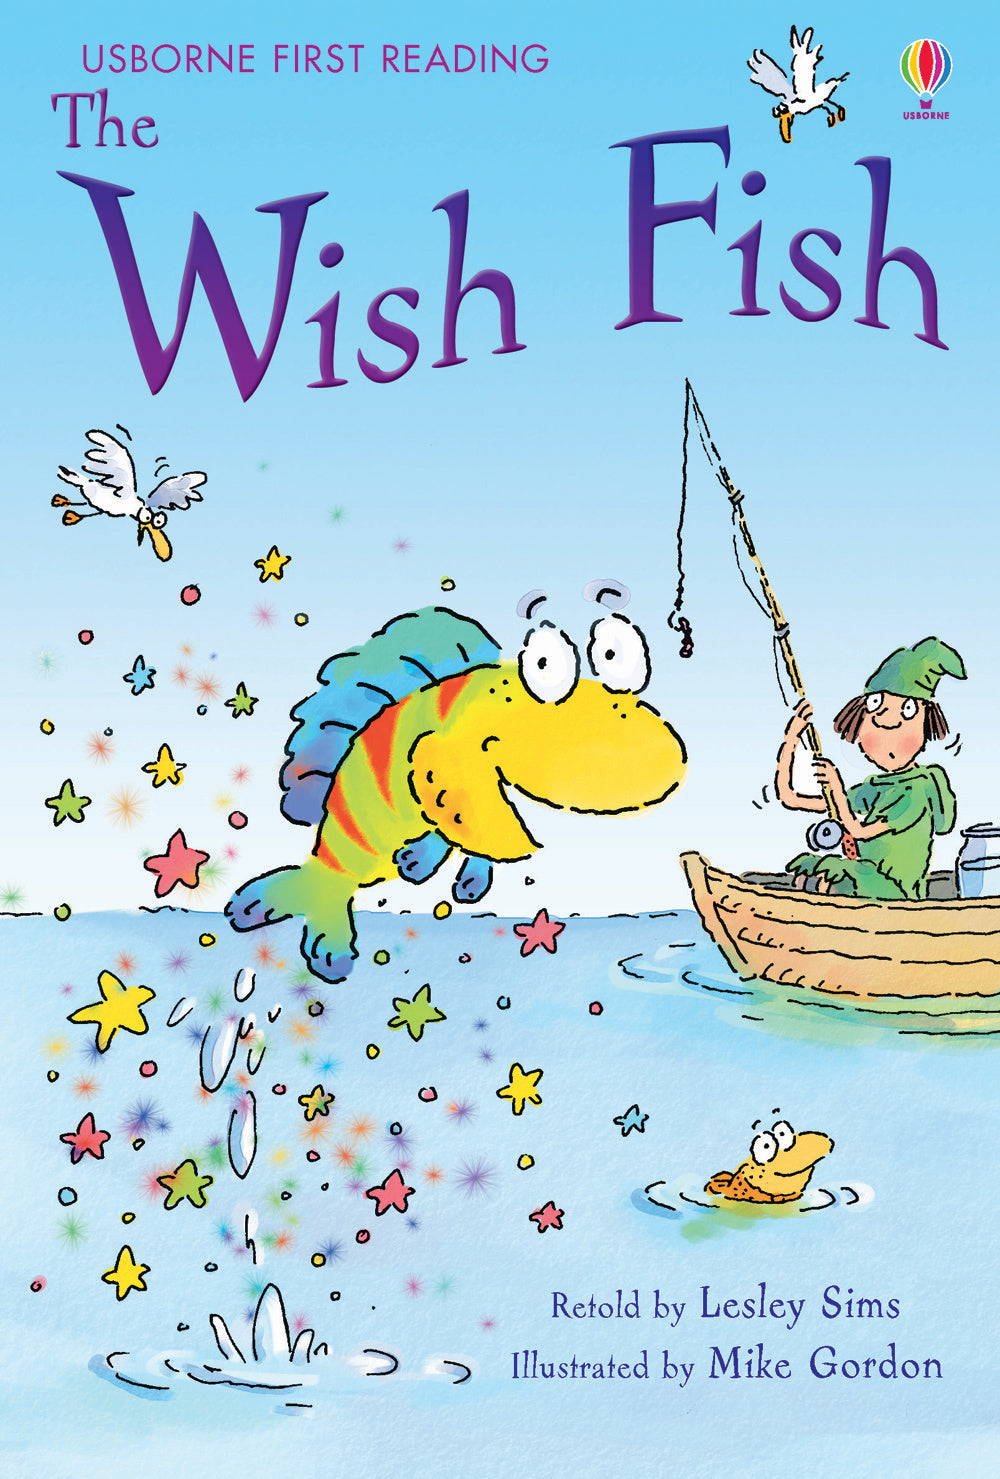 The wish fish.